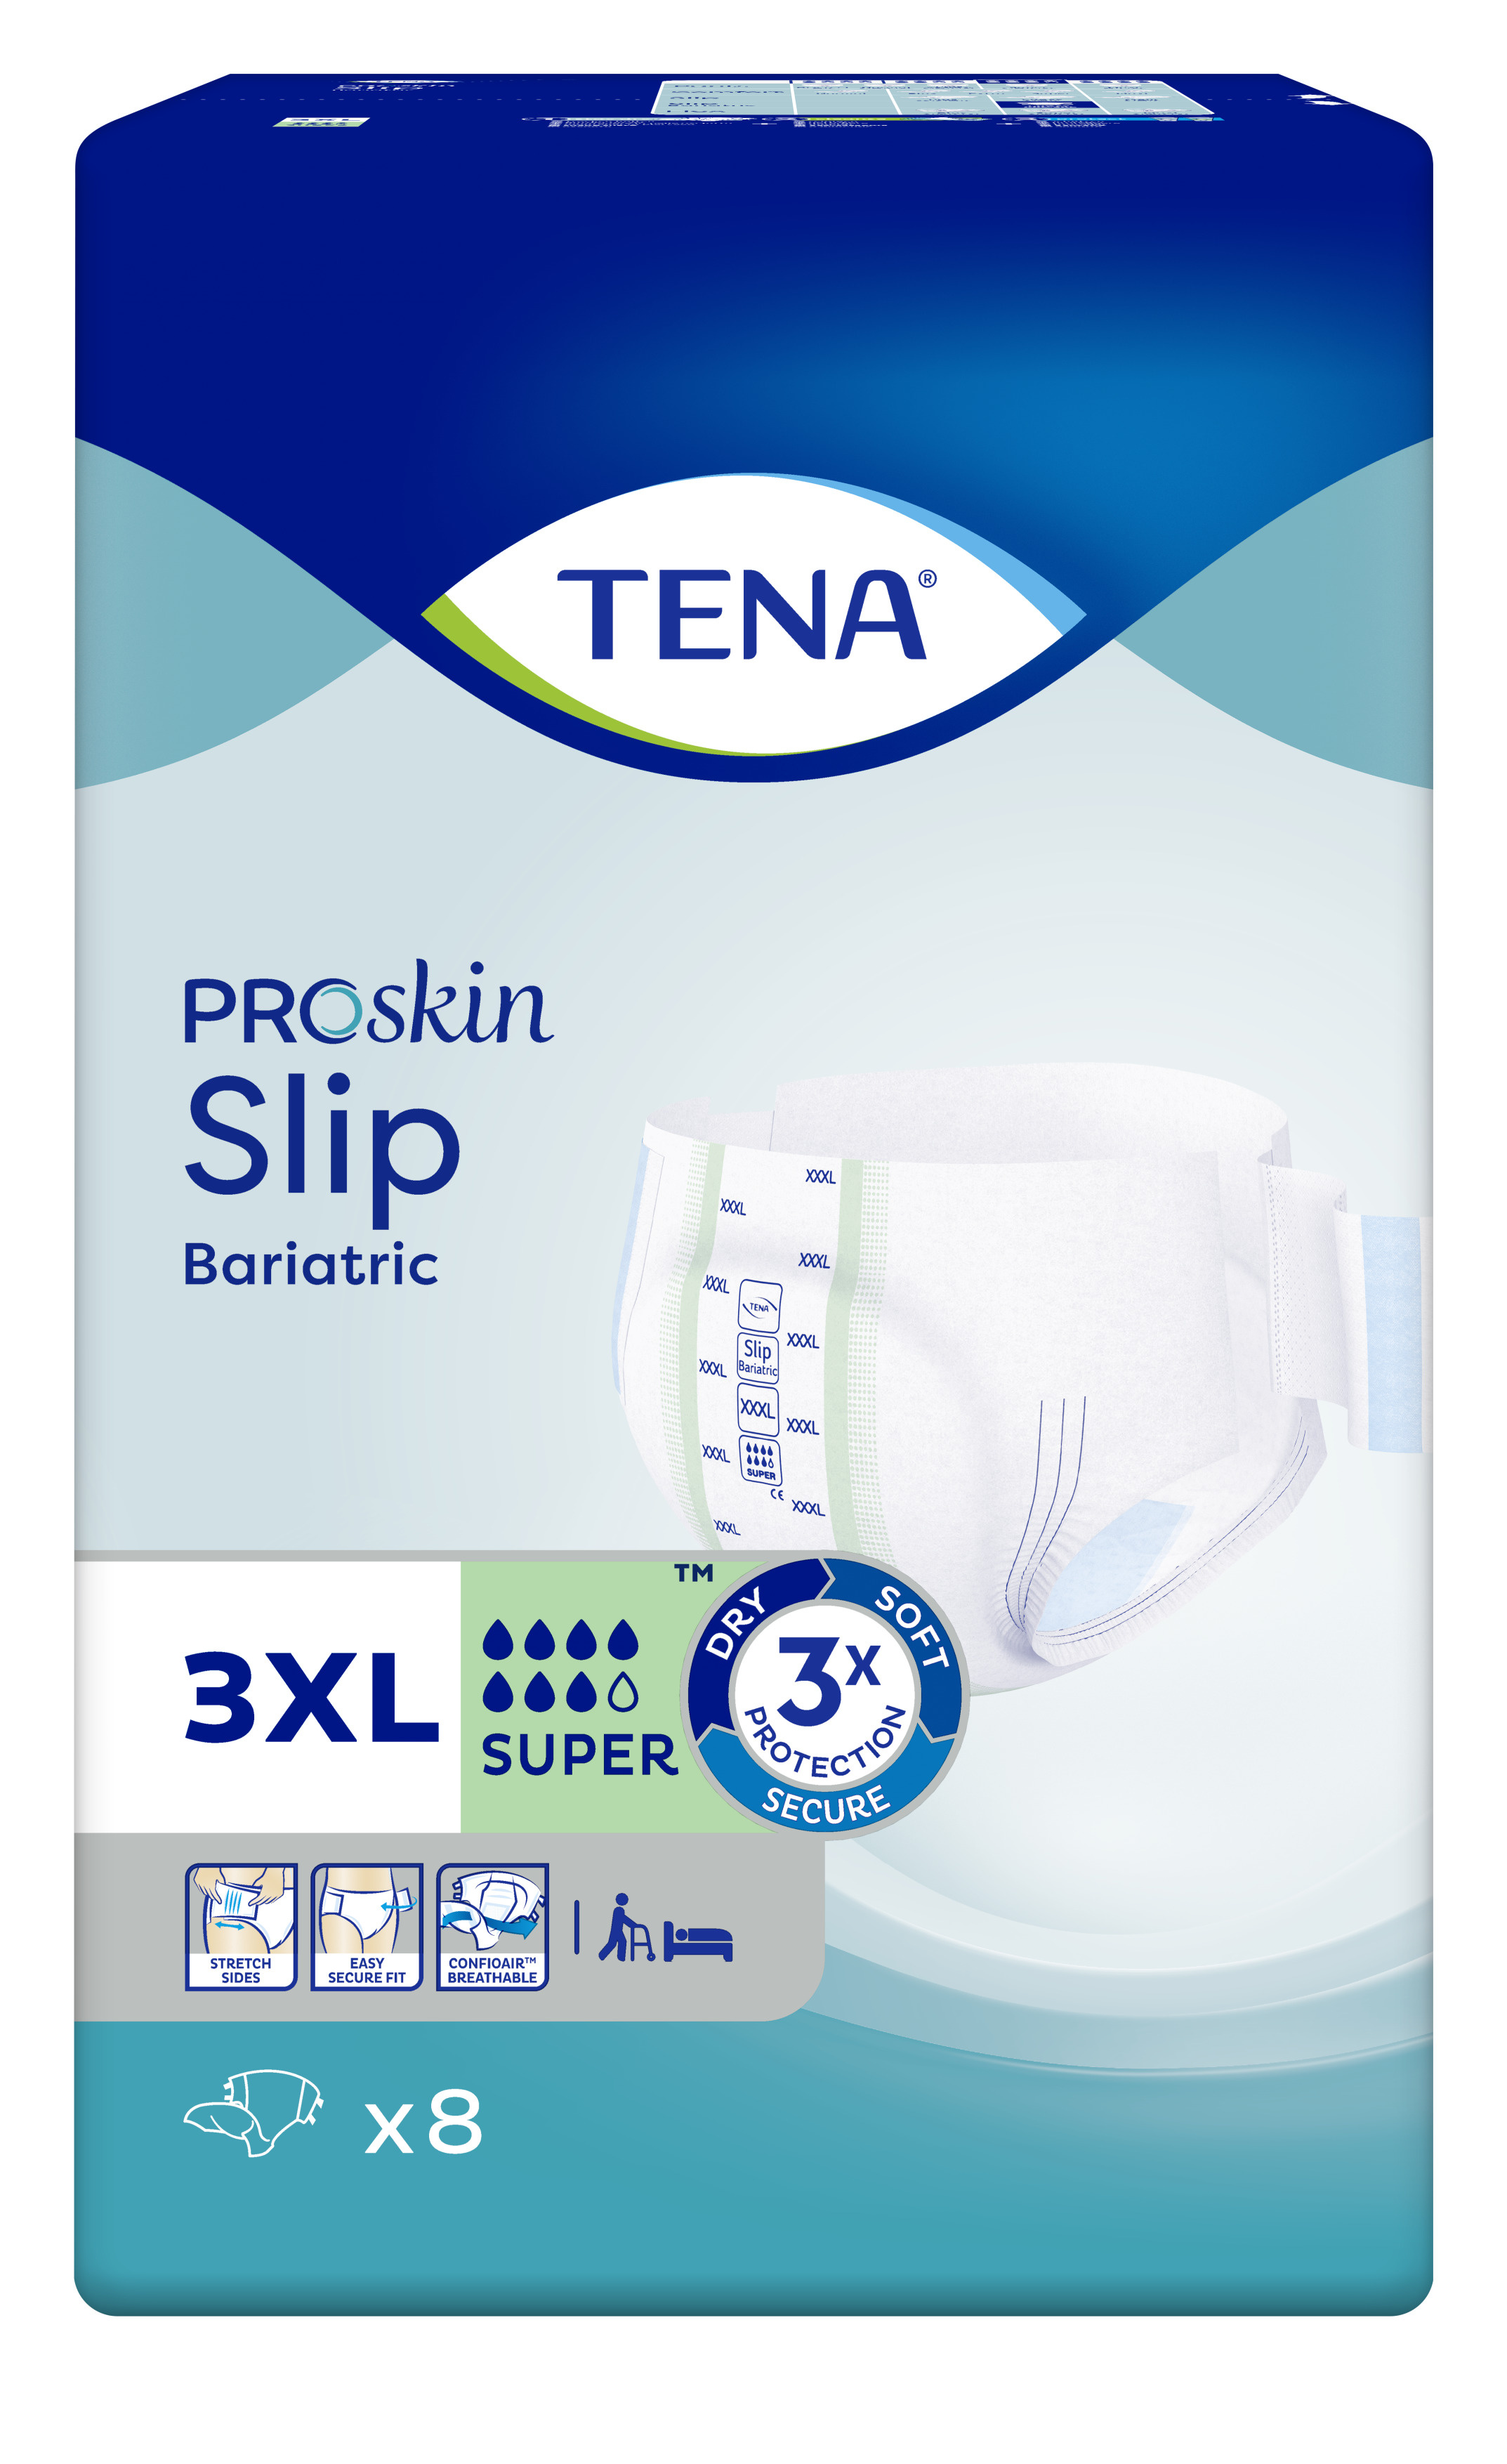 TENA PROskin Slip Bariatric Super XXXL image 0